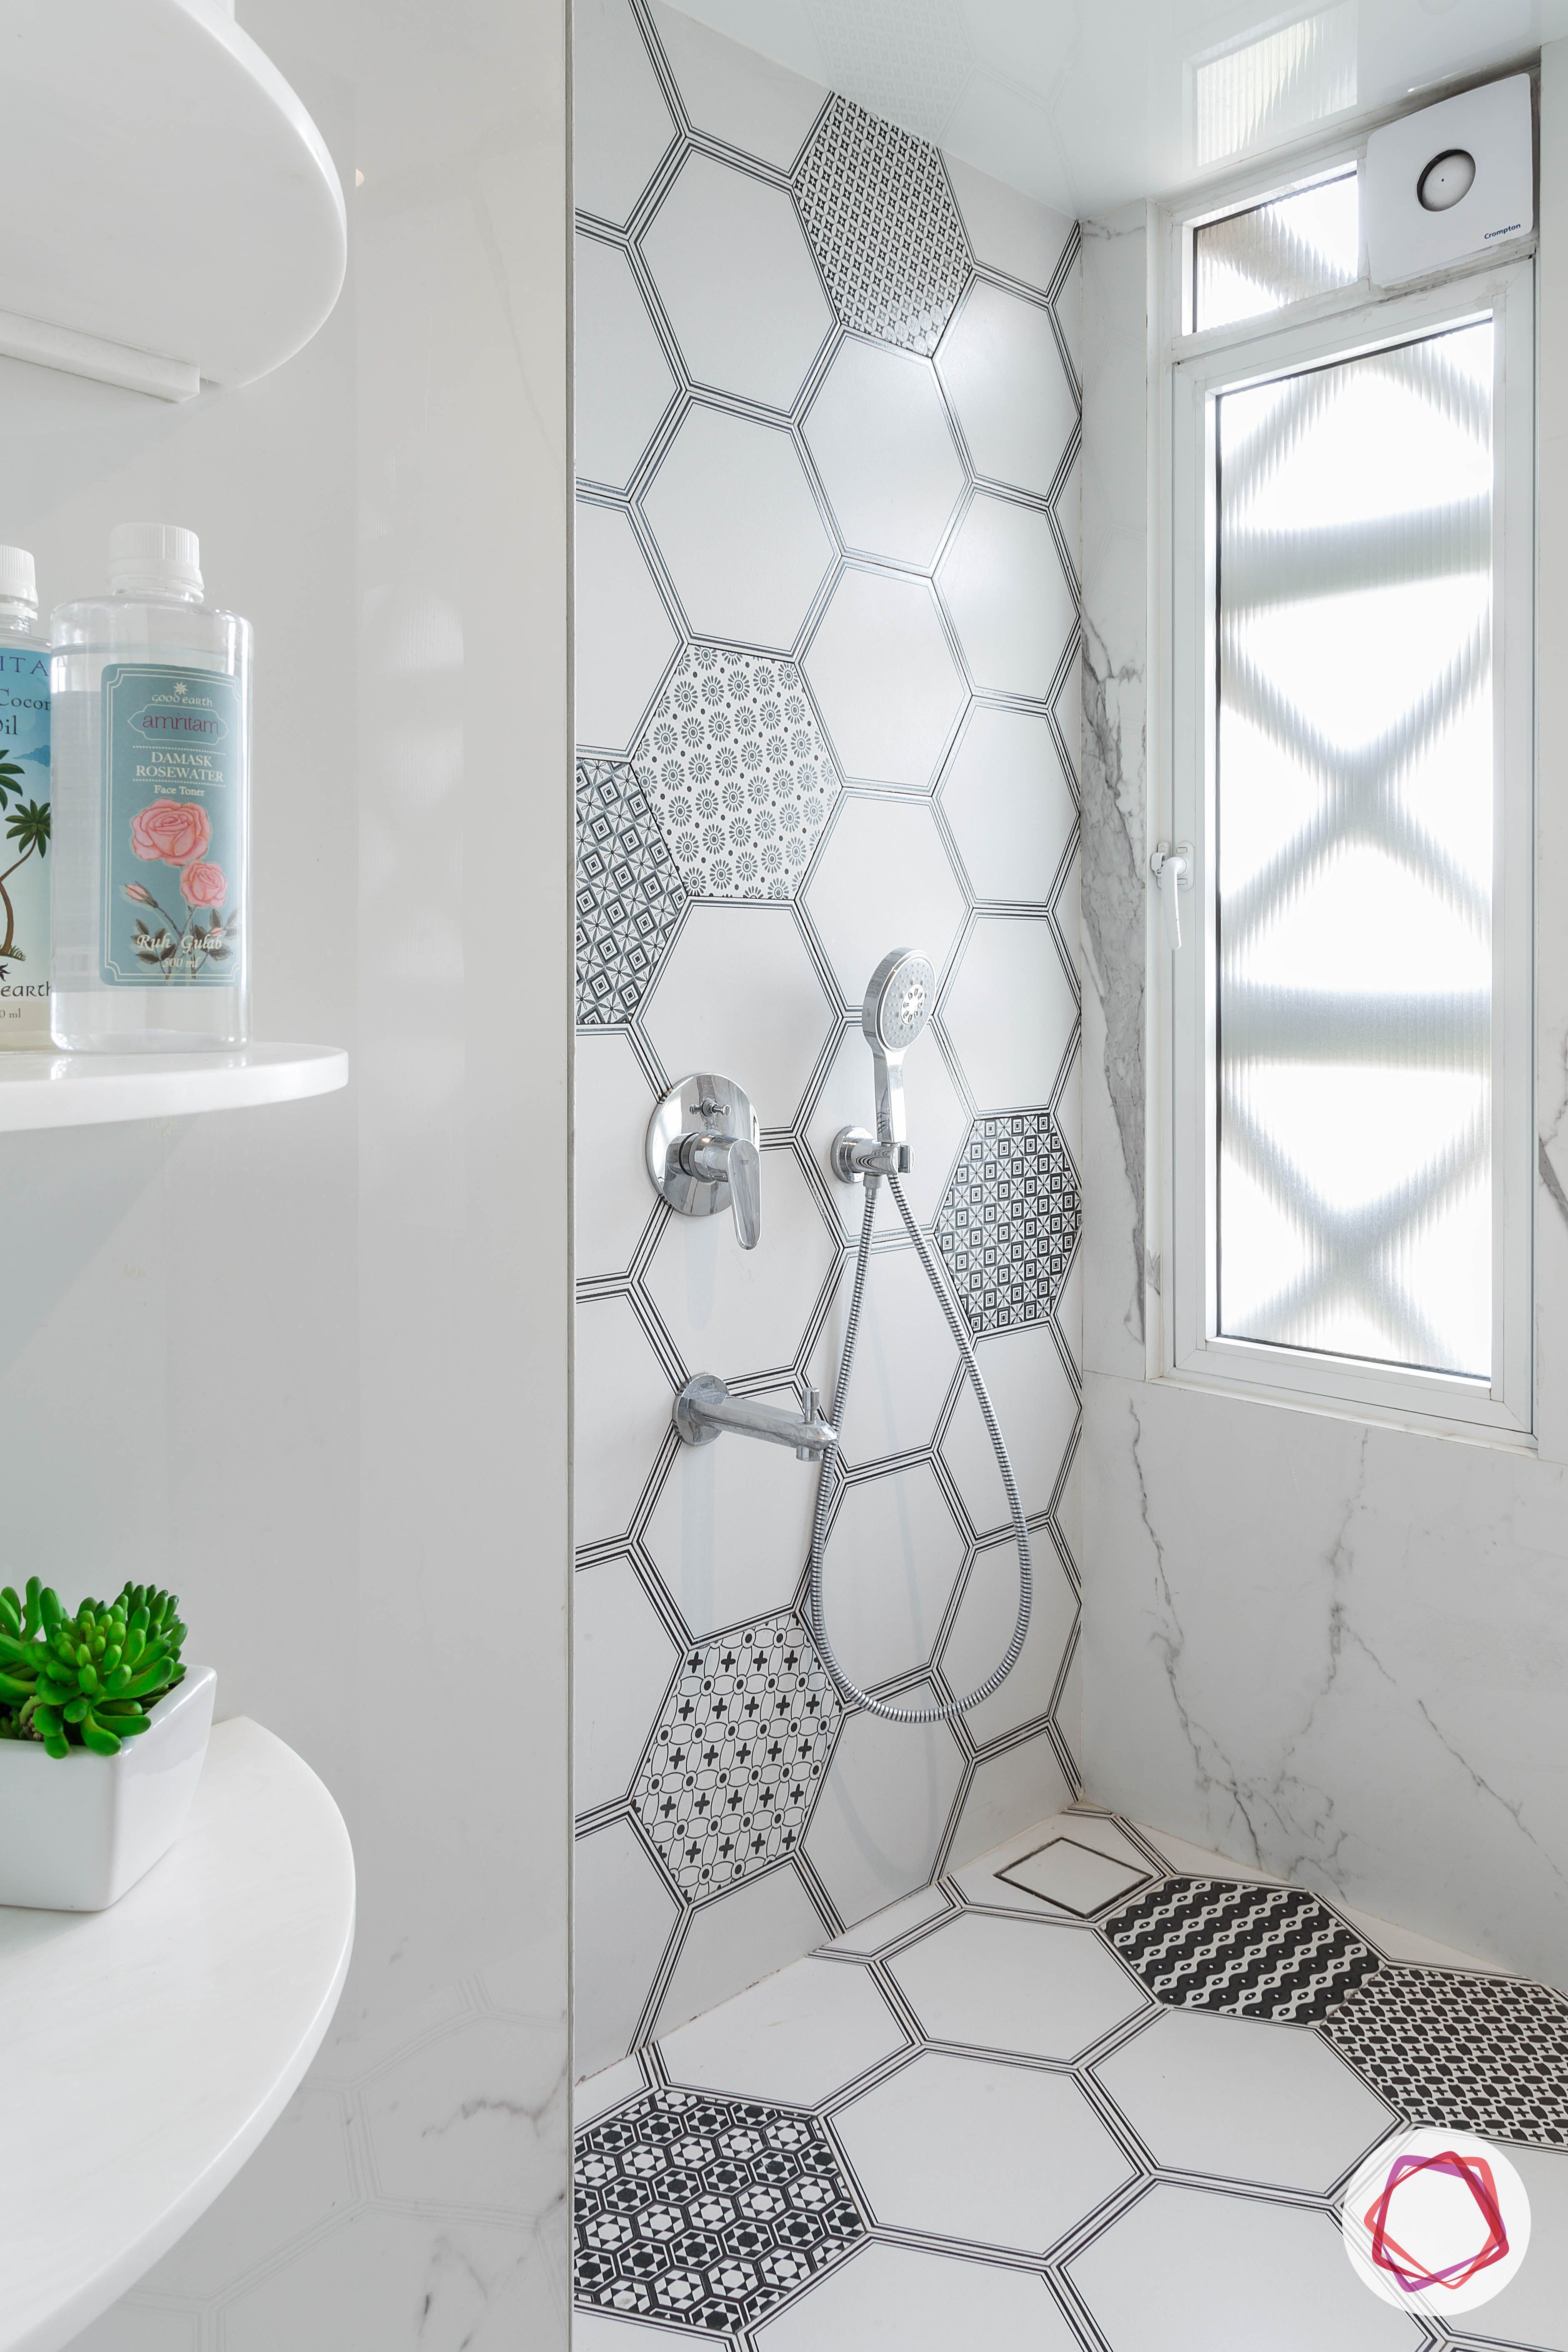 4bhk house plan-master bathroom designs-large bathroom designs-bathroom marble designs-bathroom tile designs-hexagonal tiles-shower cubicle designs